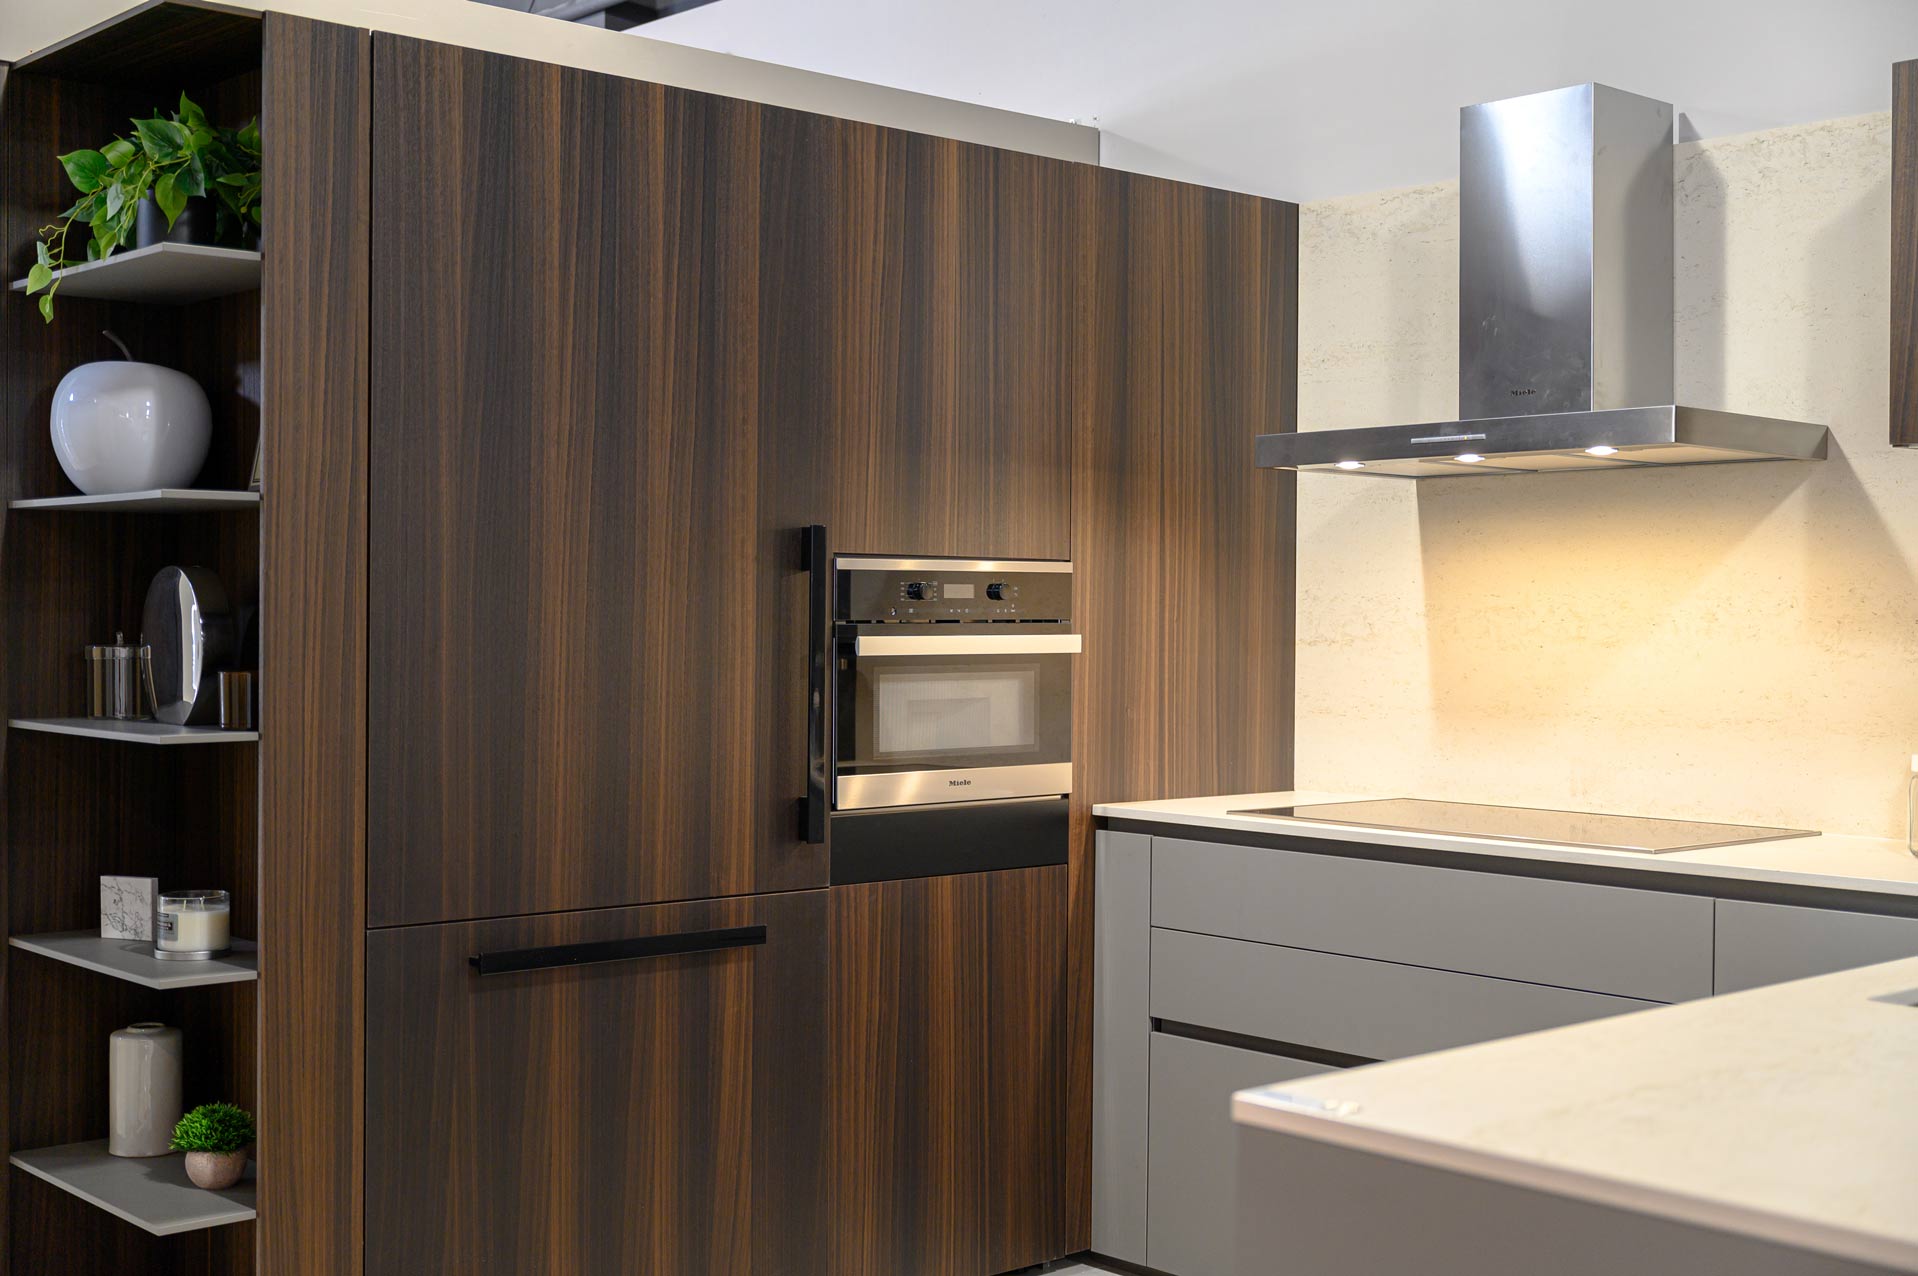 Kitchens with modular design